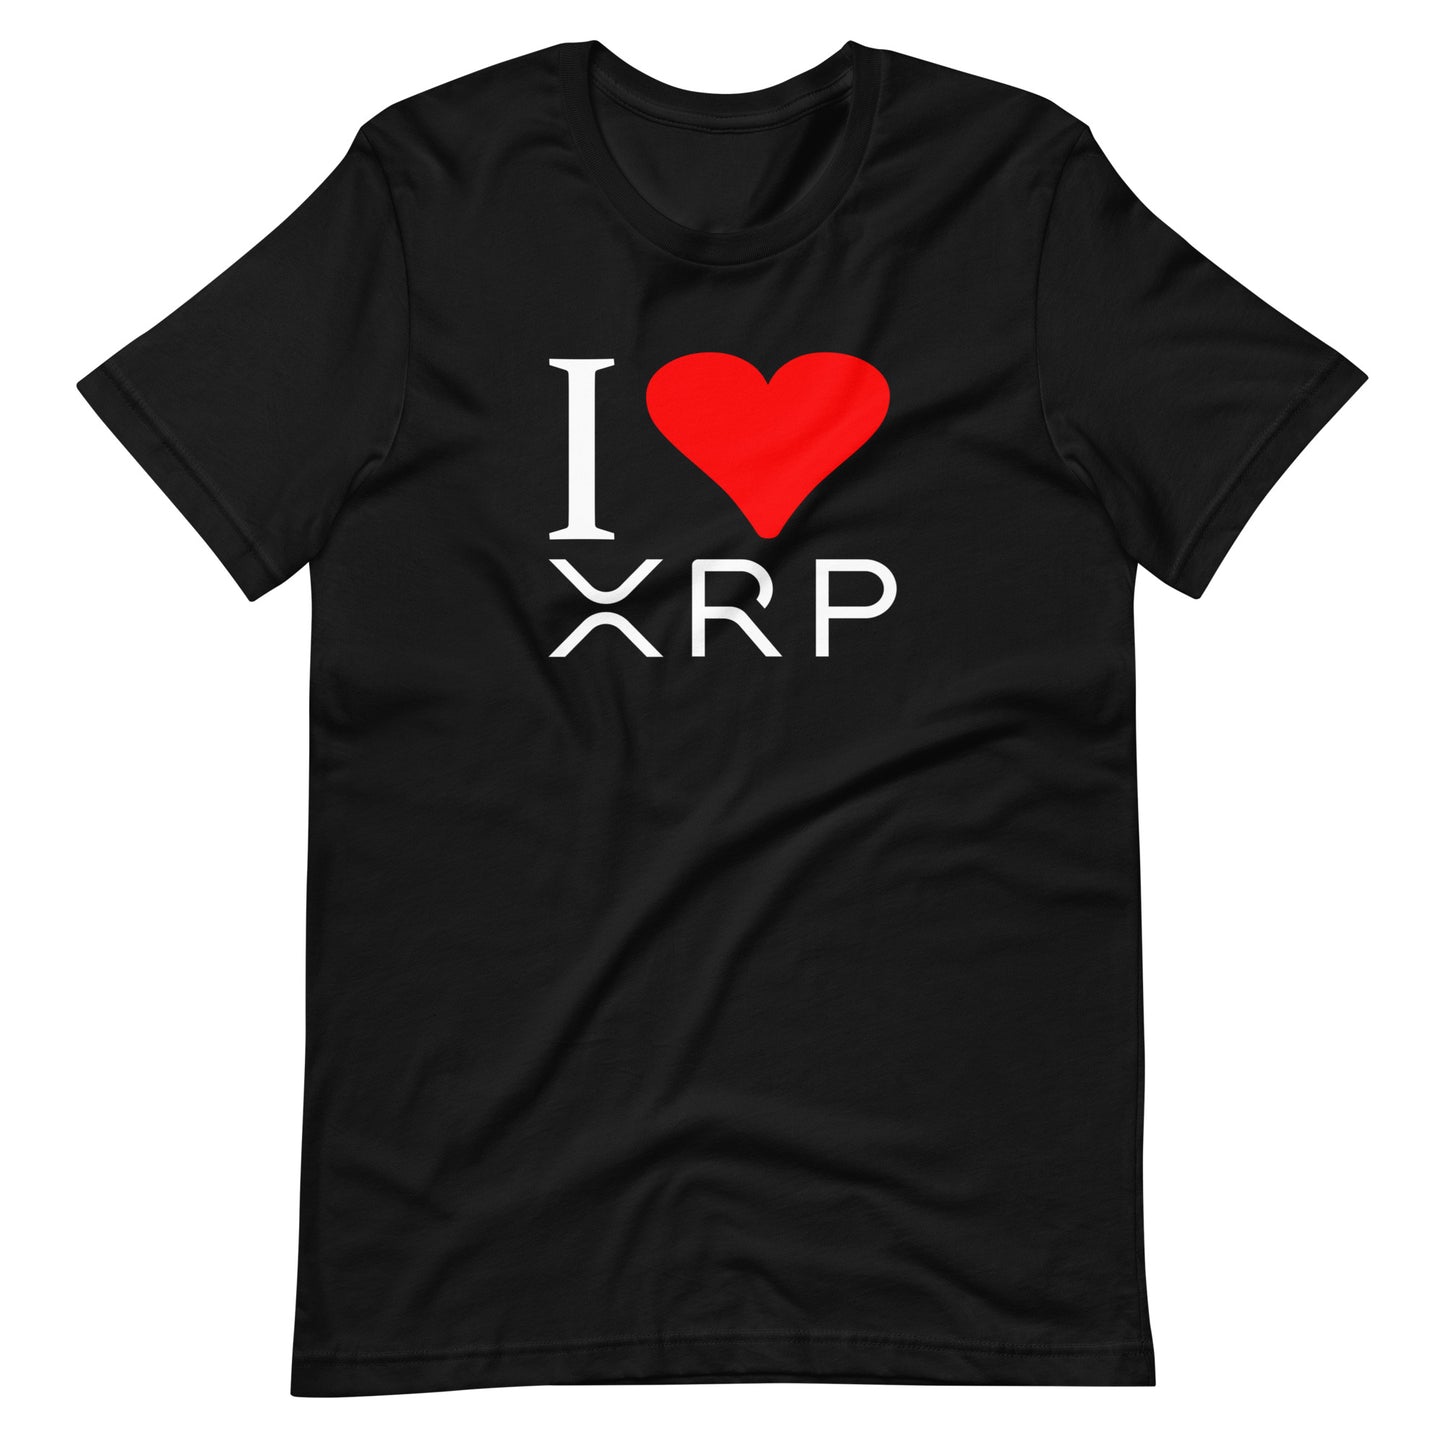 Xrp I Love